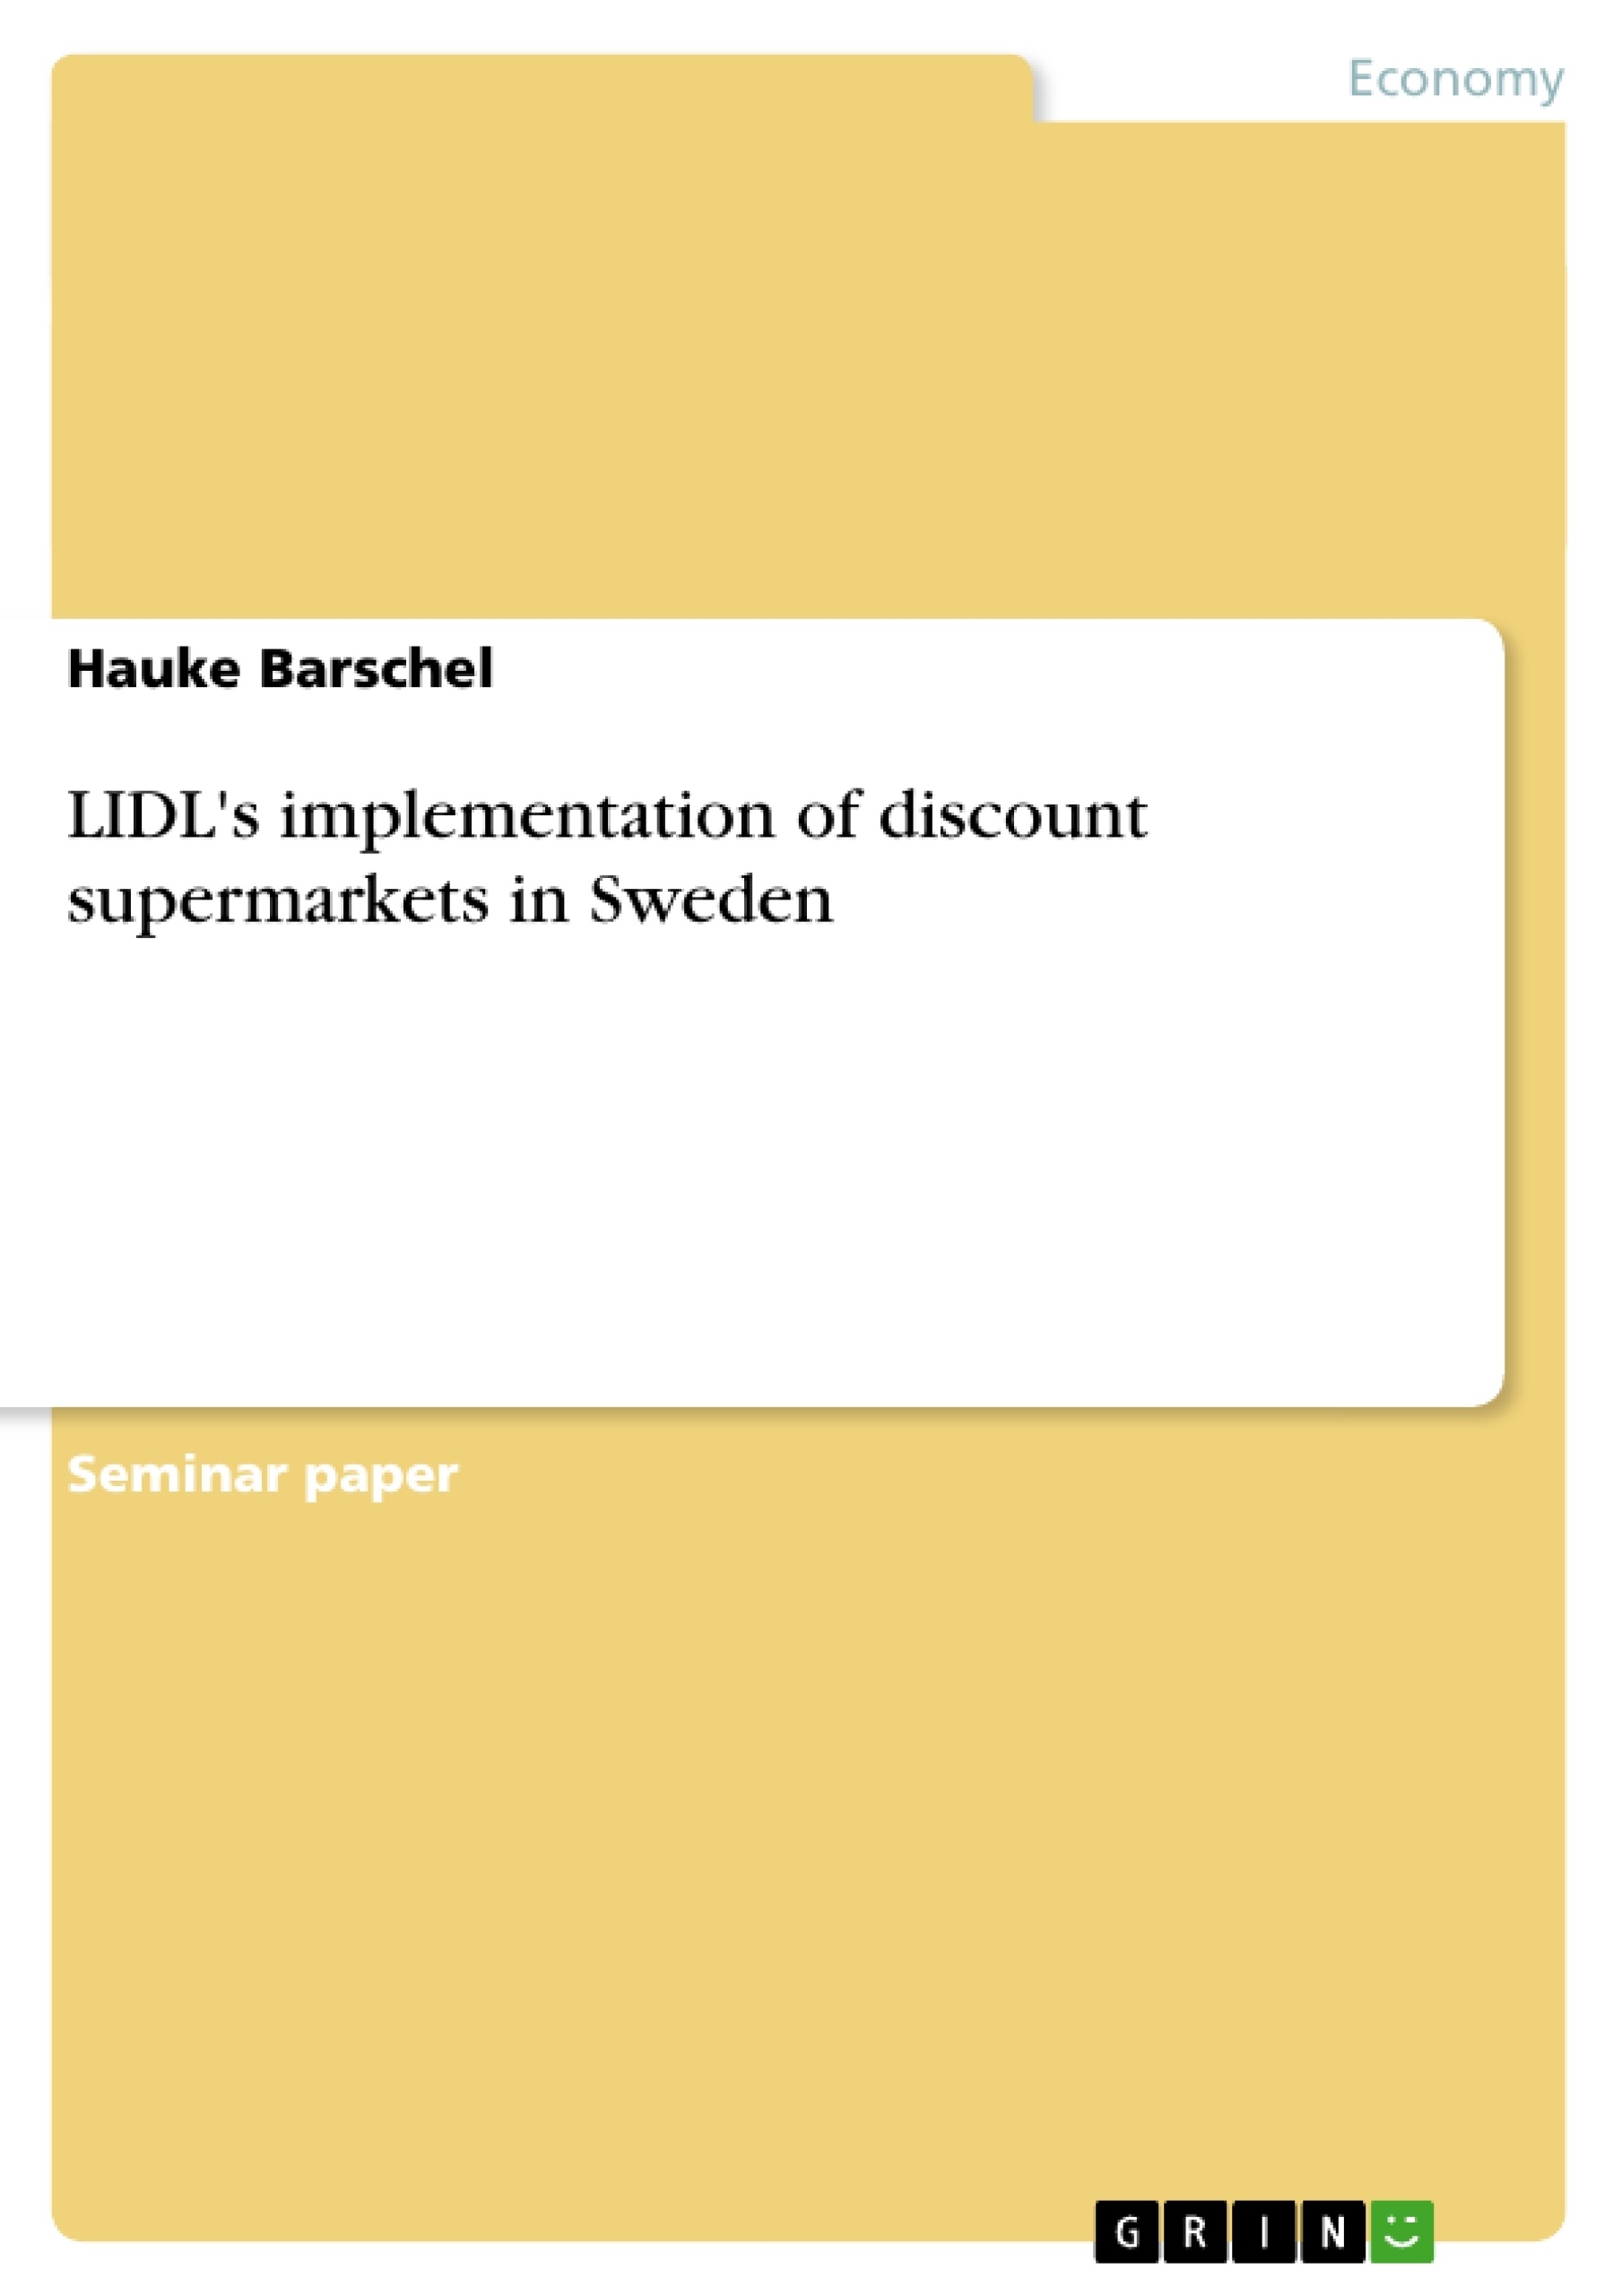 Title: LIDL's implementation of discount supermarkets in Sweden